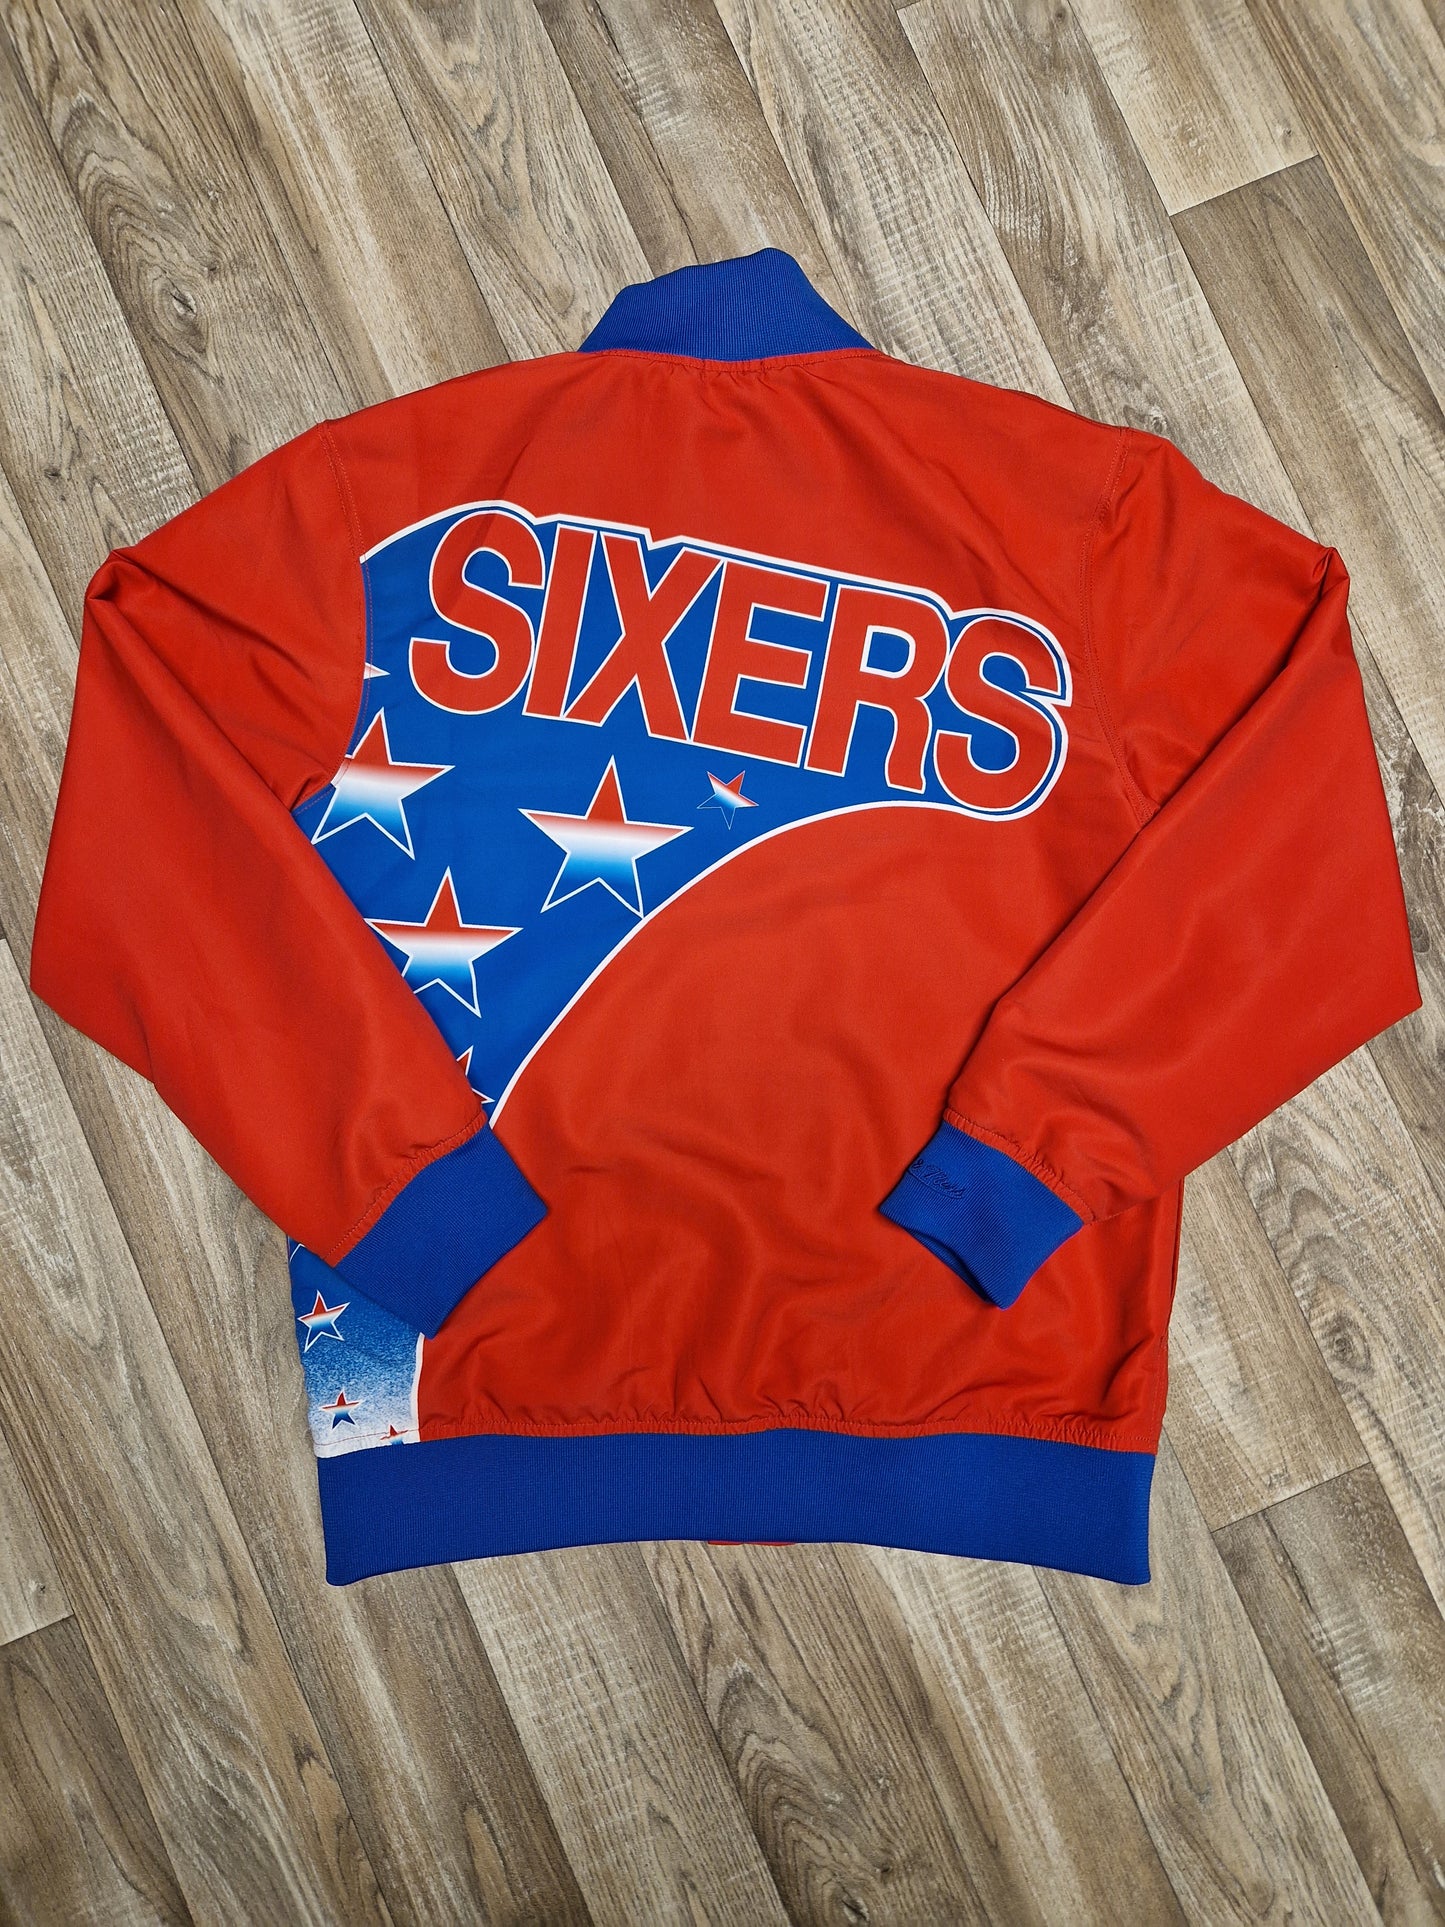 Philadelphia 76ers Jacket Size Medium